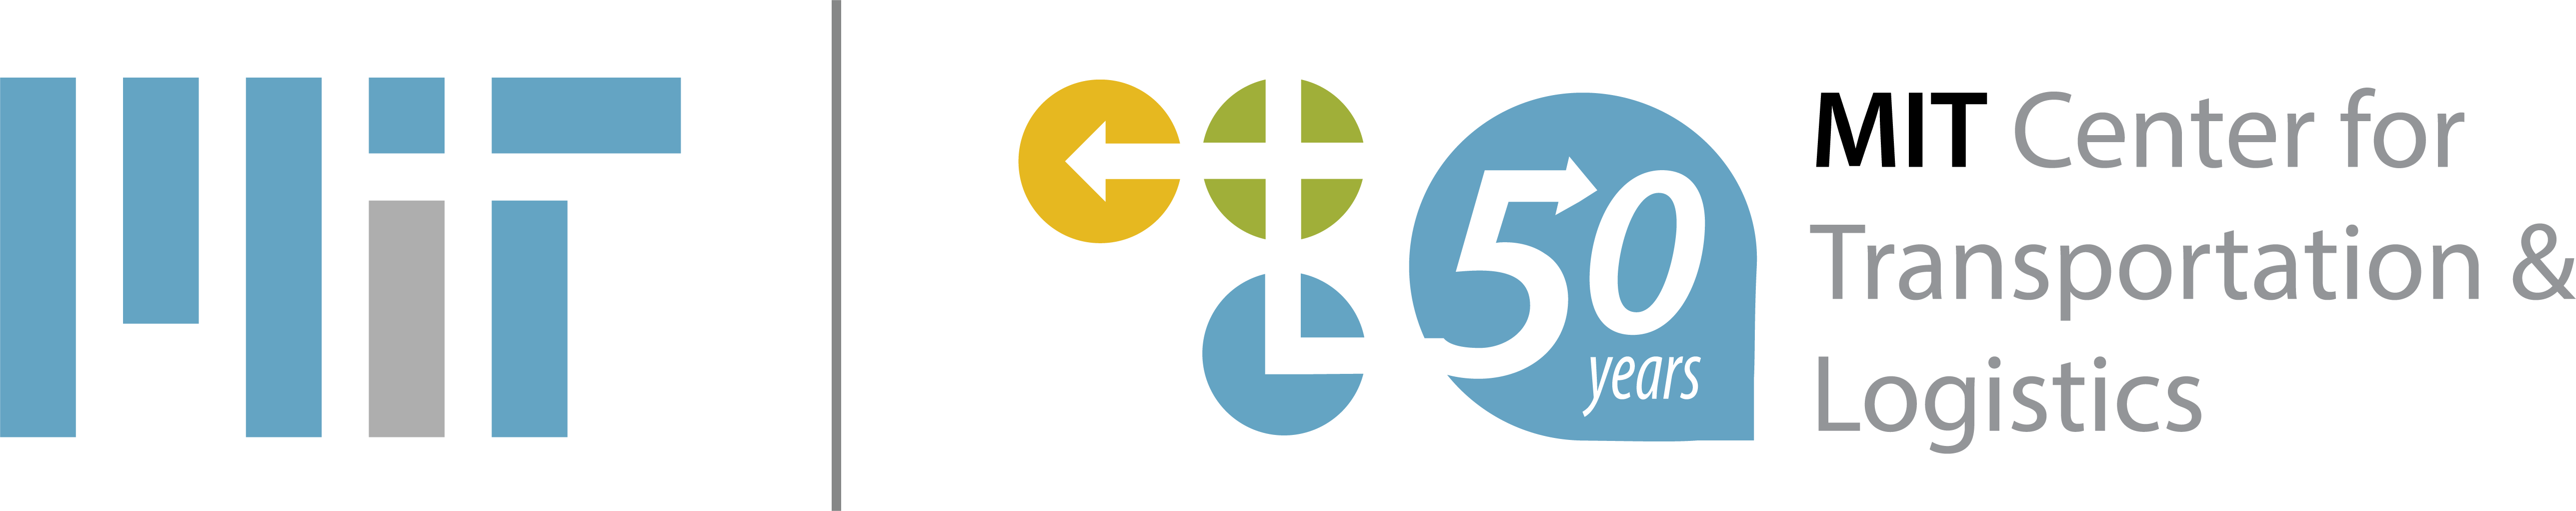 ctl 50 logo graphic